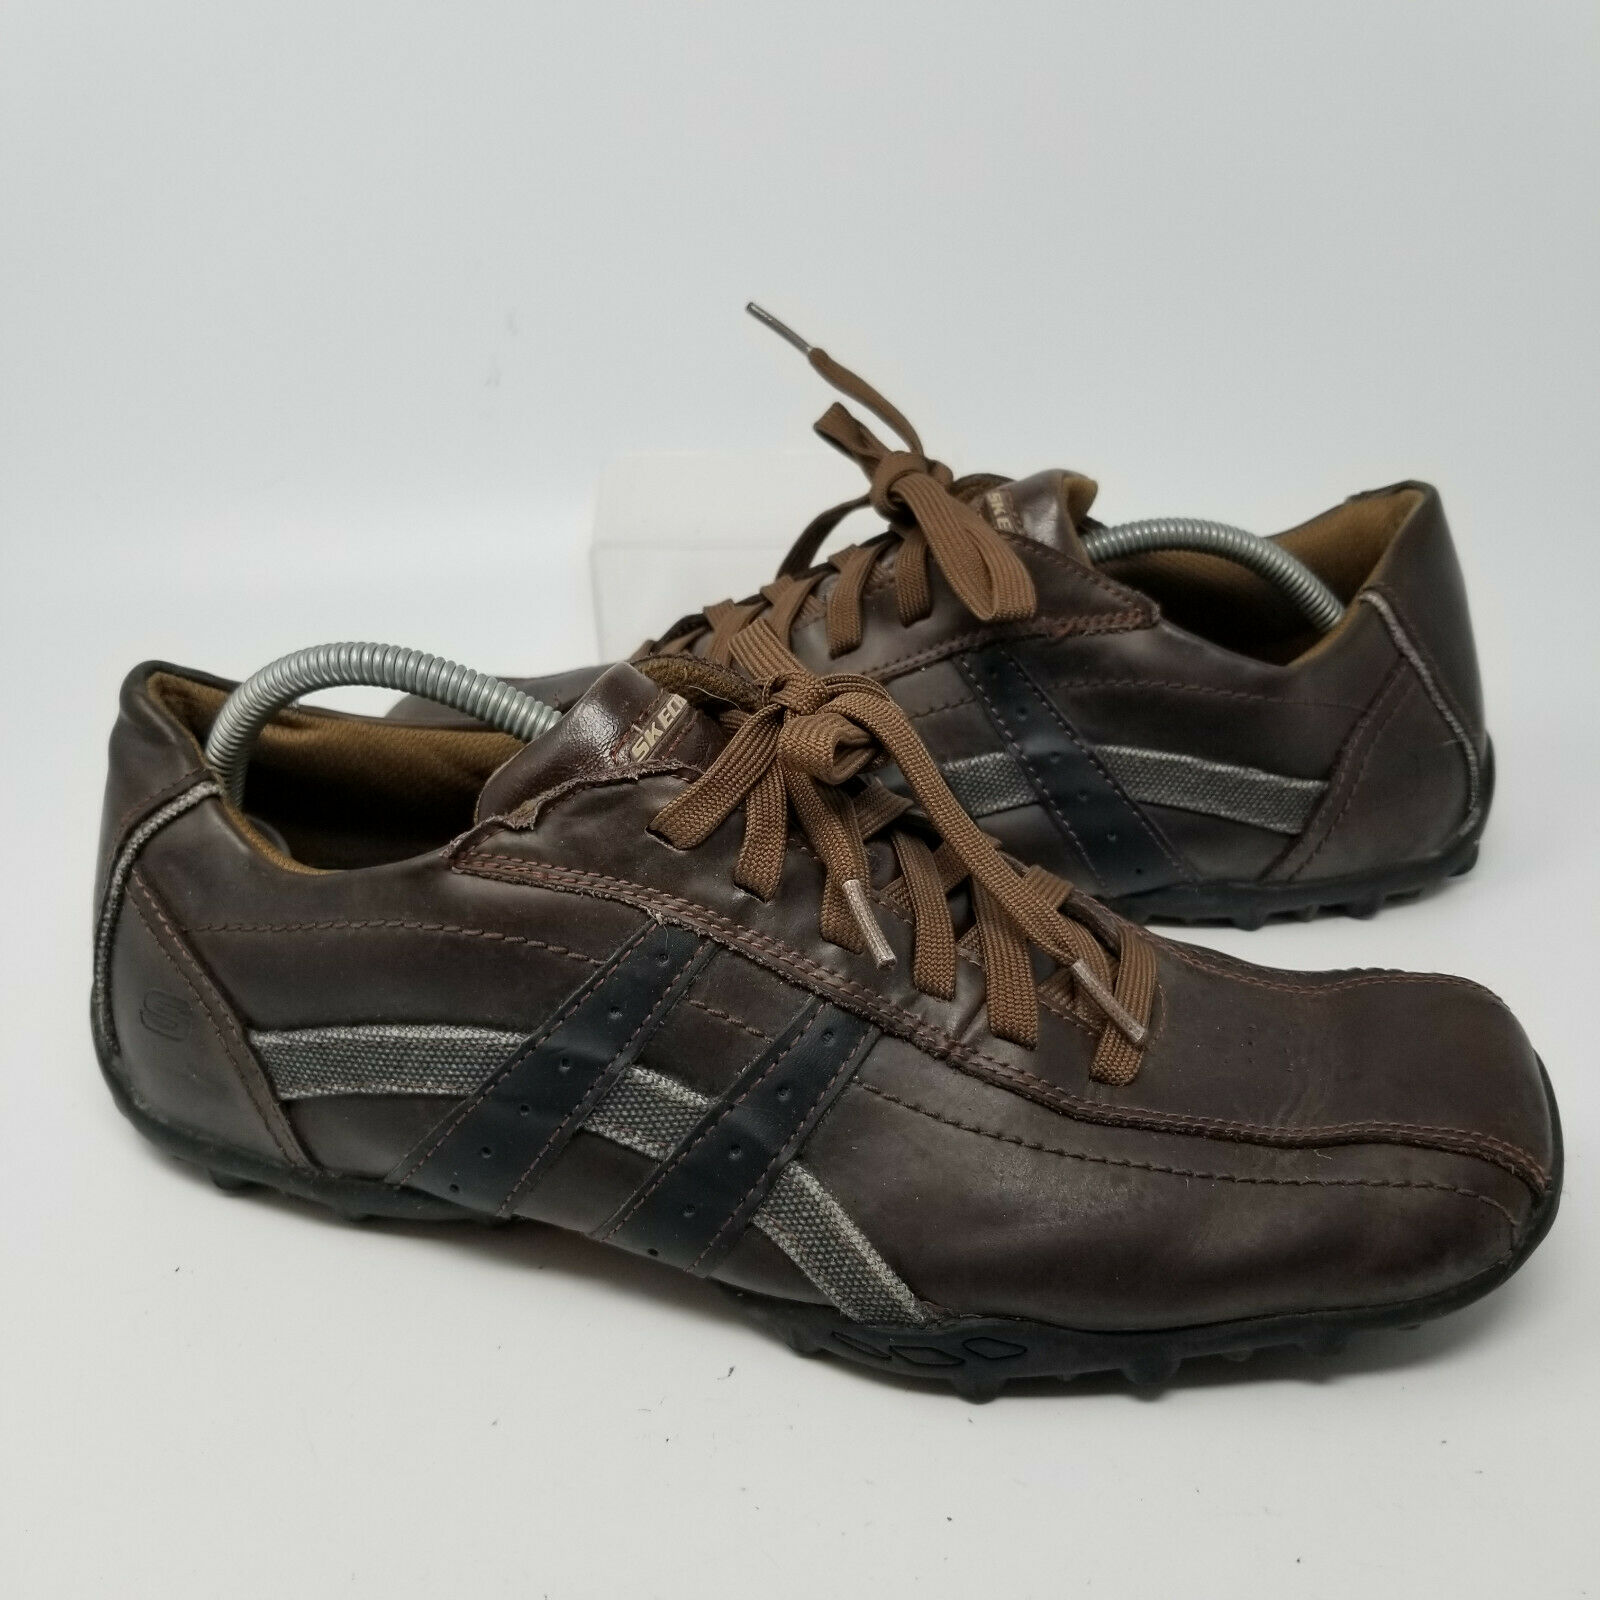 Skechers Urban Track Brown Leather Walking Tennis Shoes Sneaker Men Size 12